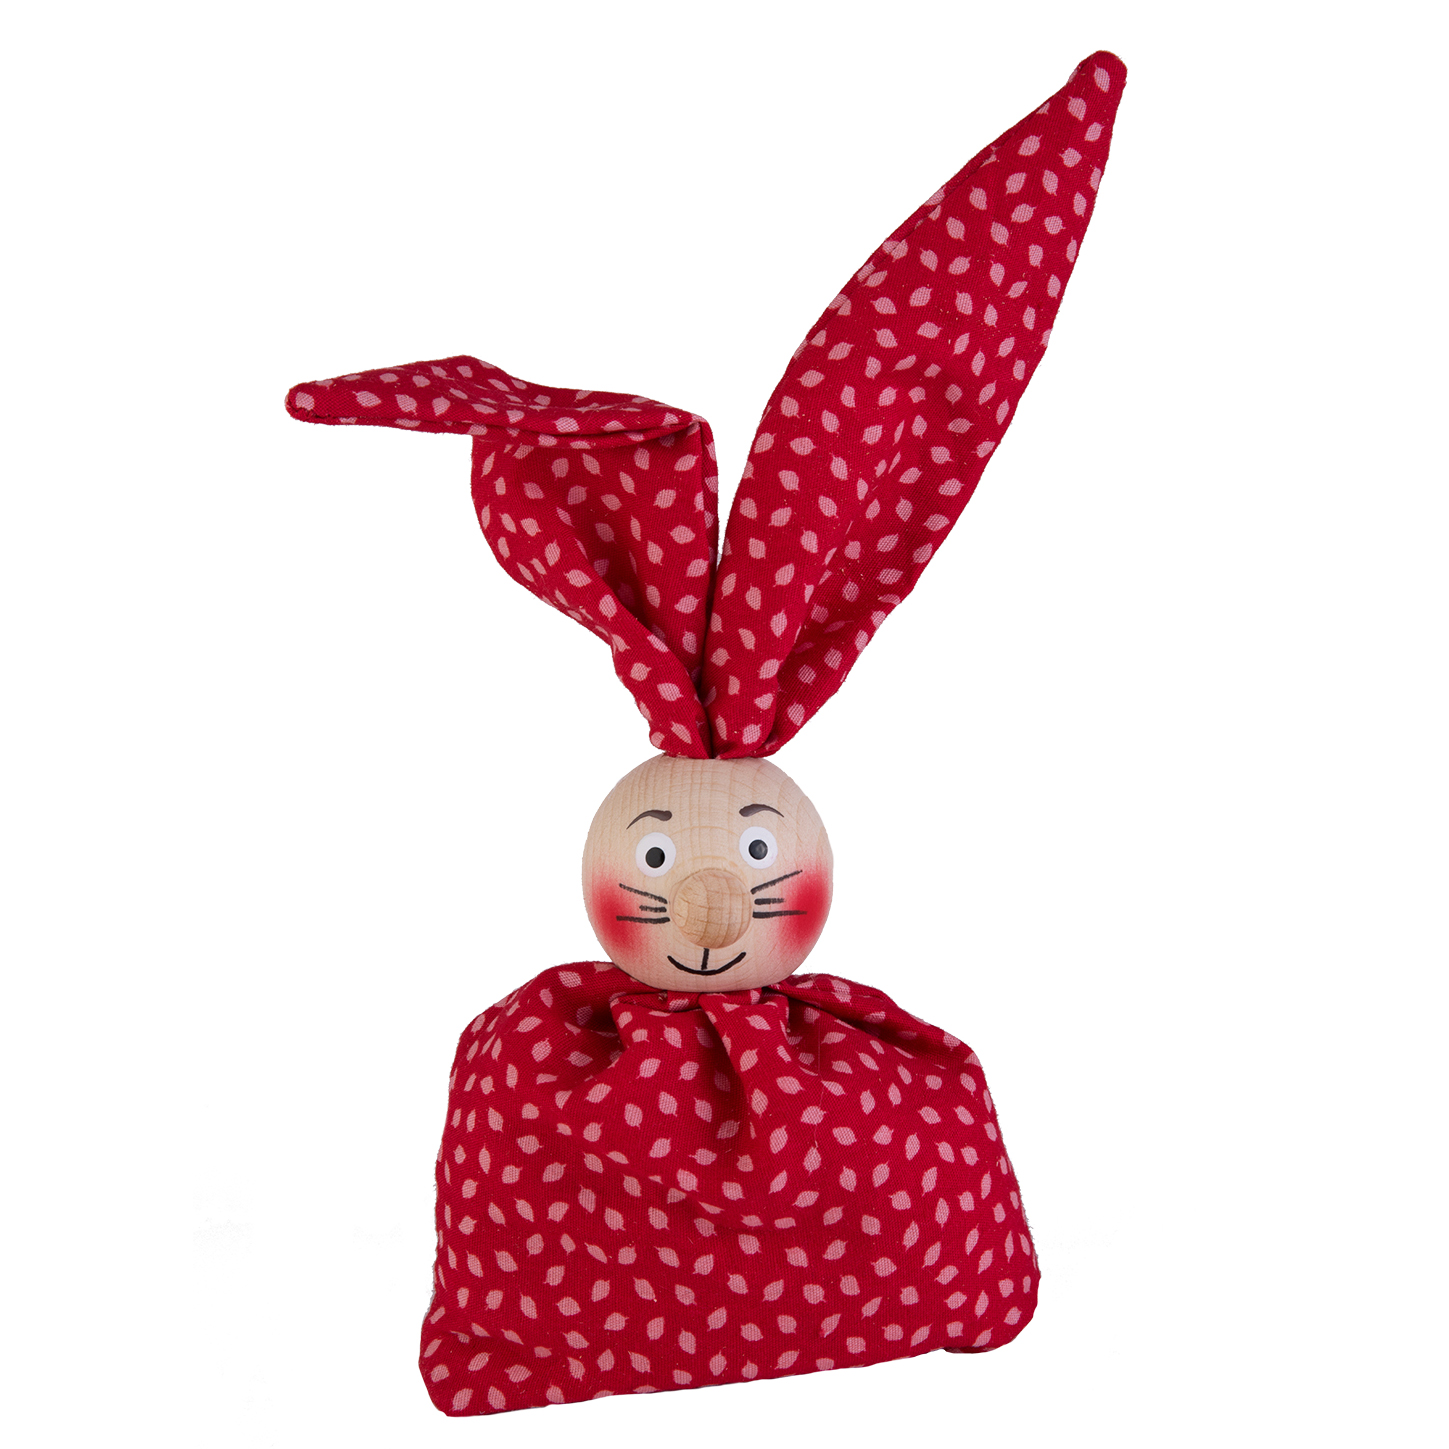 Bunny Hopsy - pine bag sleep aid by KERSA